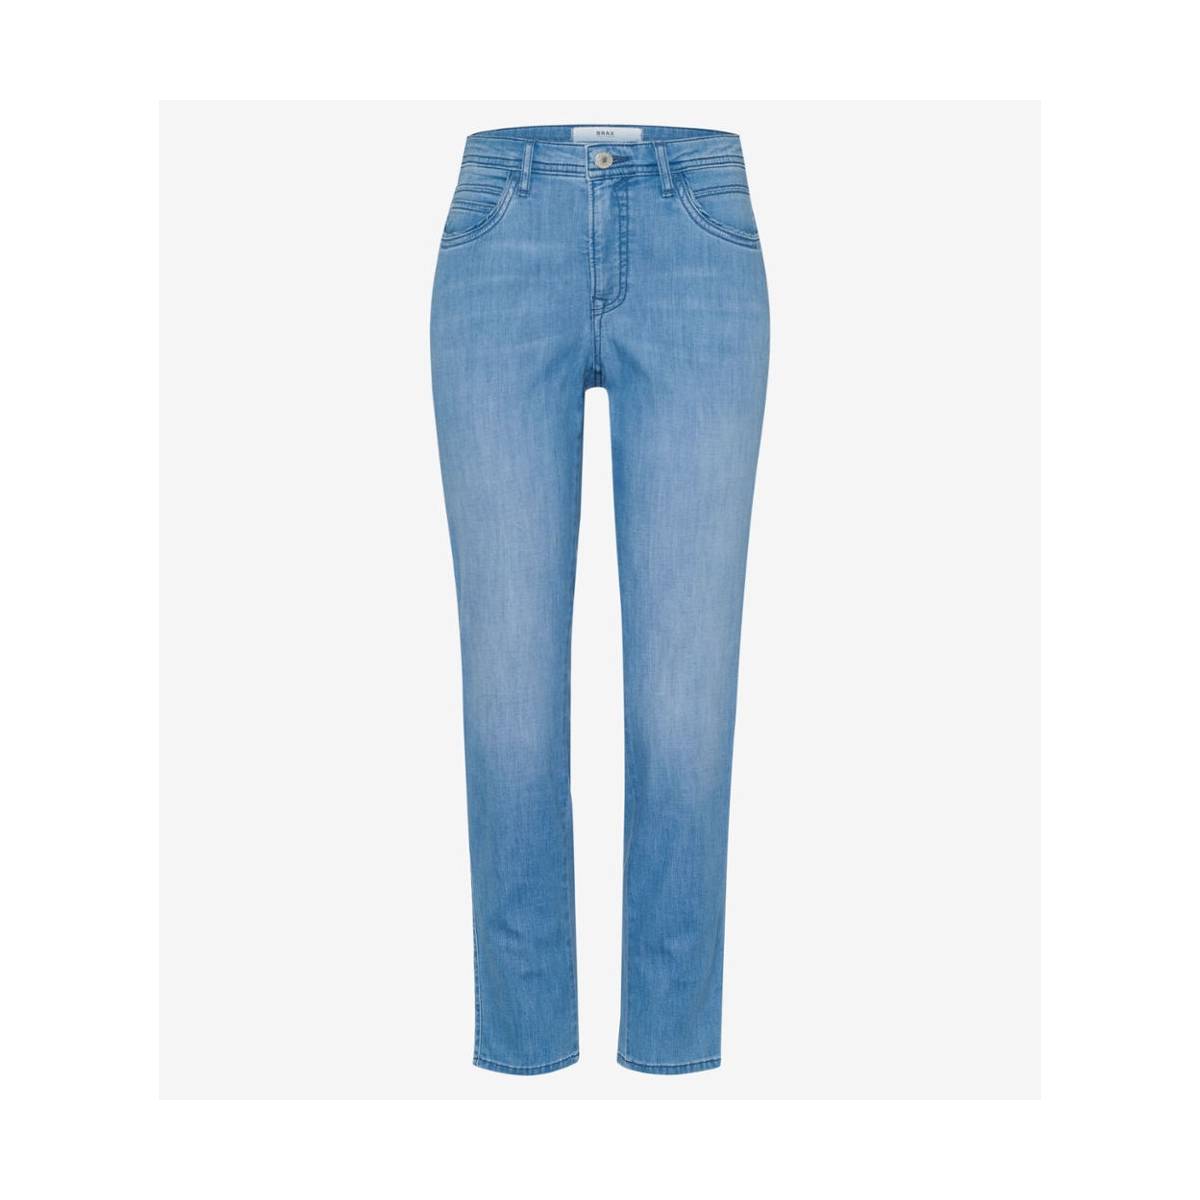 BRAX  broeken lichte jeans -  model 71-7308 09954920 - Dameskleding broeken jeans